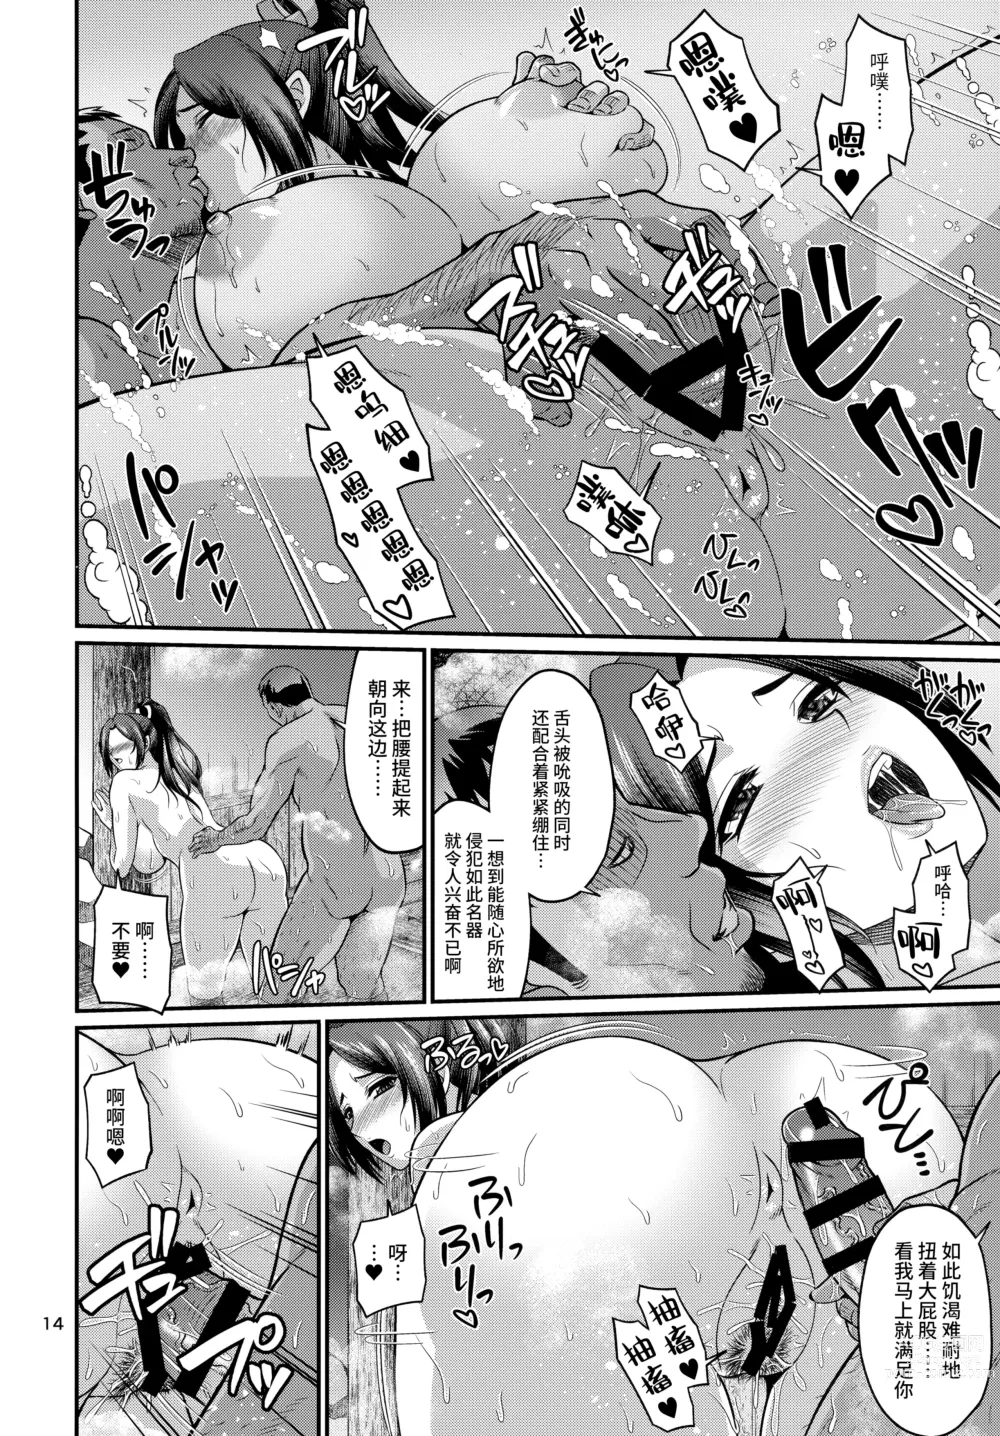 Page 14 of doujinshi Shiranui-ryuu Kunoichi VIP Gentei Nakadashi Onsen Date